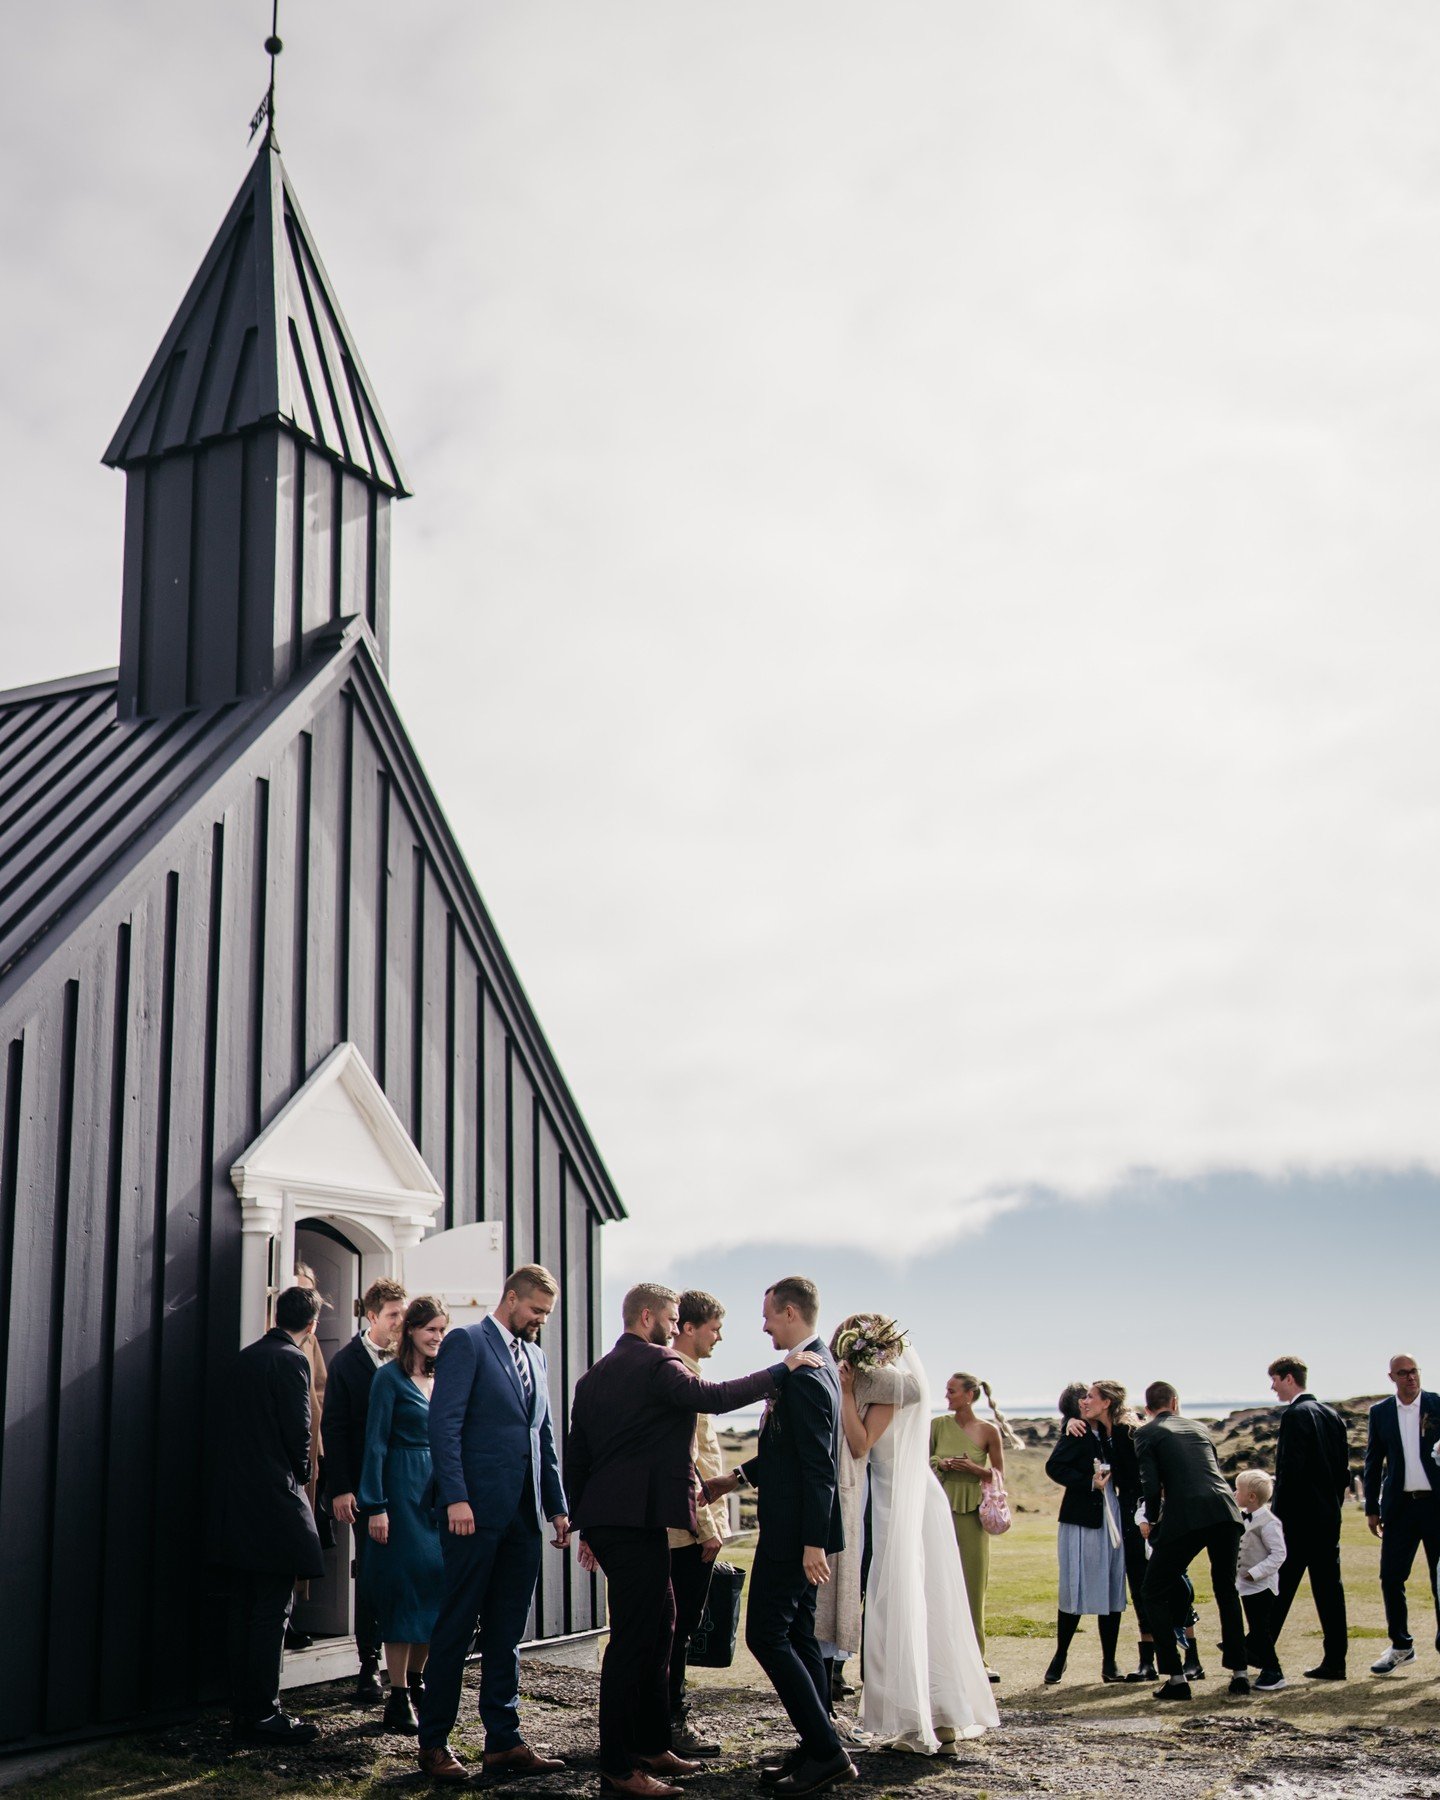 Beautiful Iceland wedding one year ago